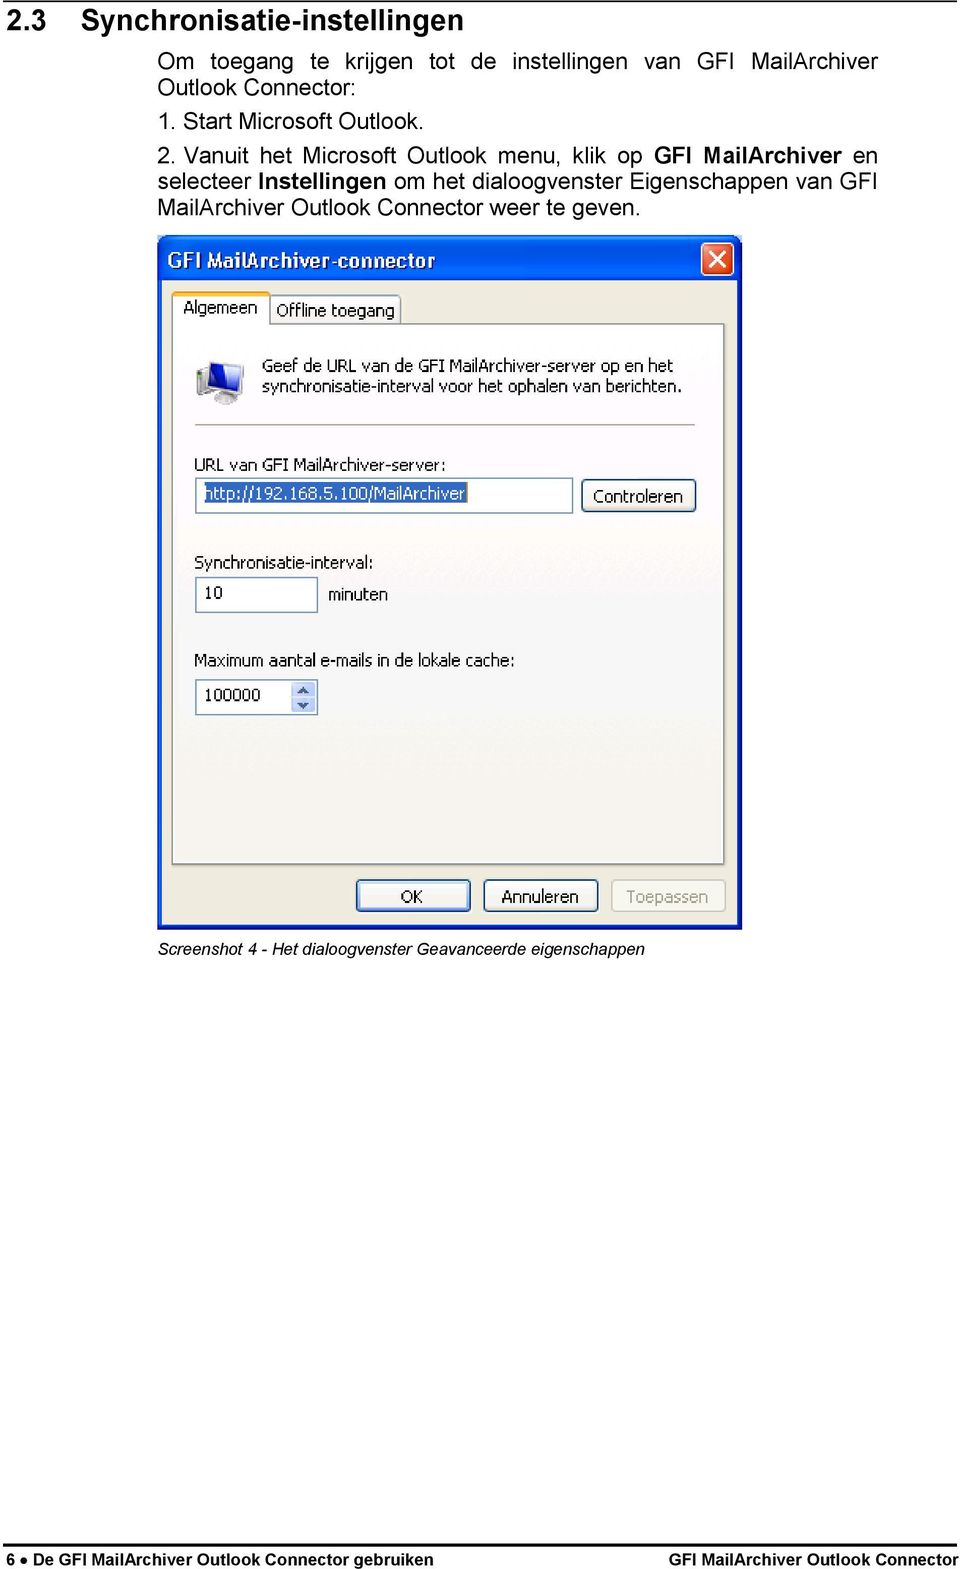 Vanuit het Microsoft Outlook menu, klik op GFI MailArchiver en selecteer Instellingen om het dialoogvenster